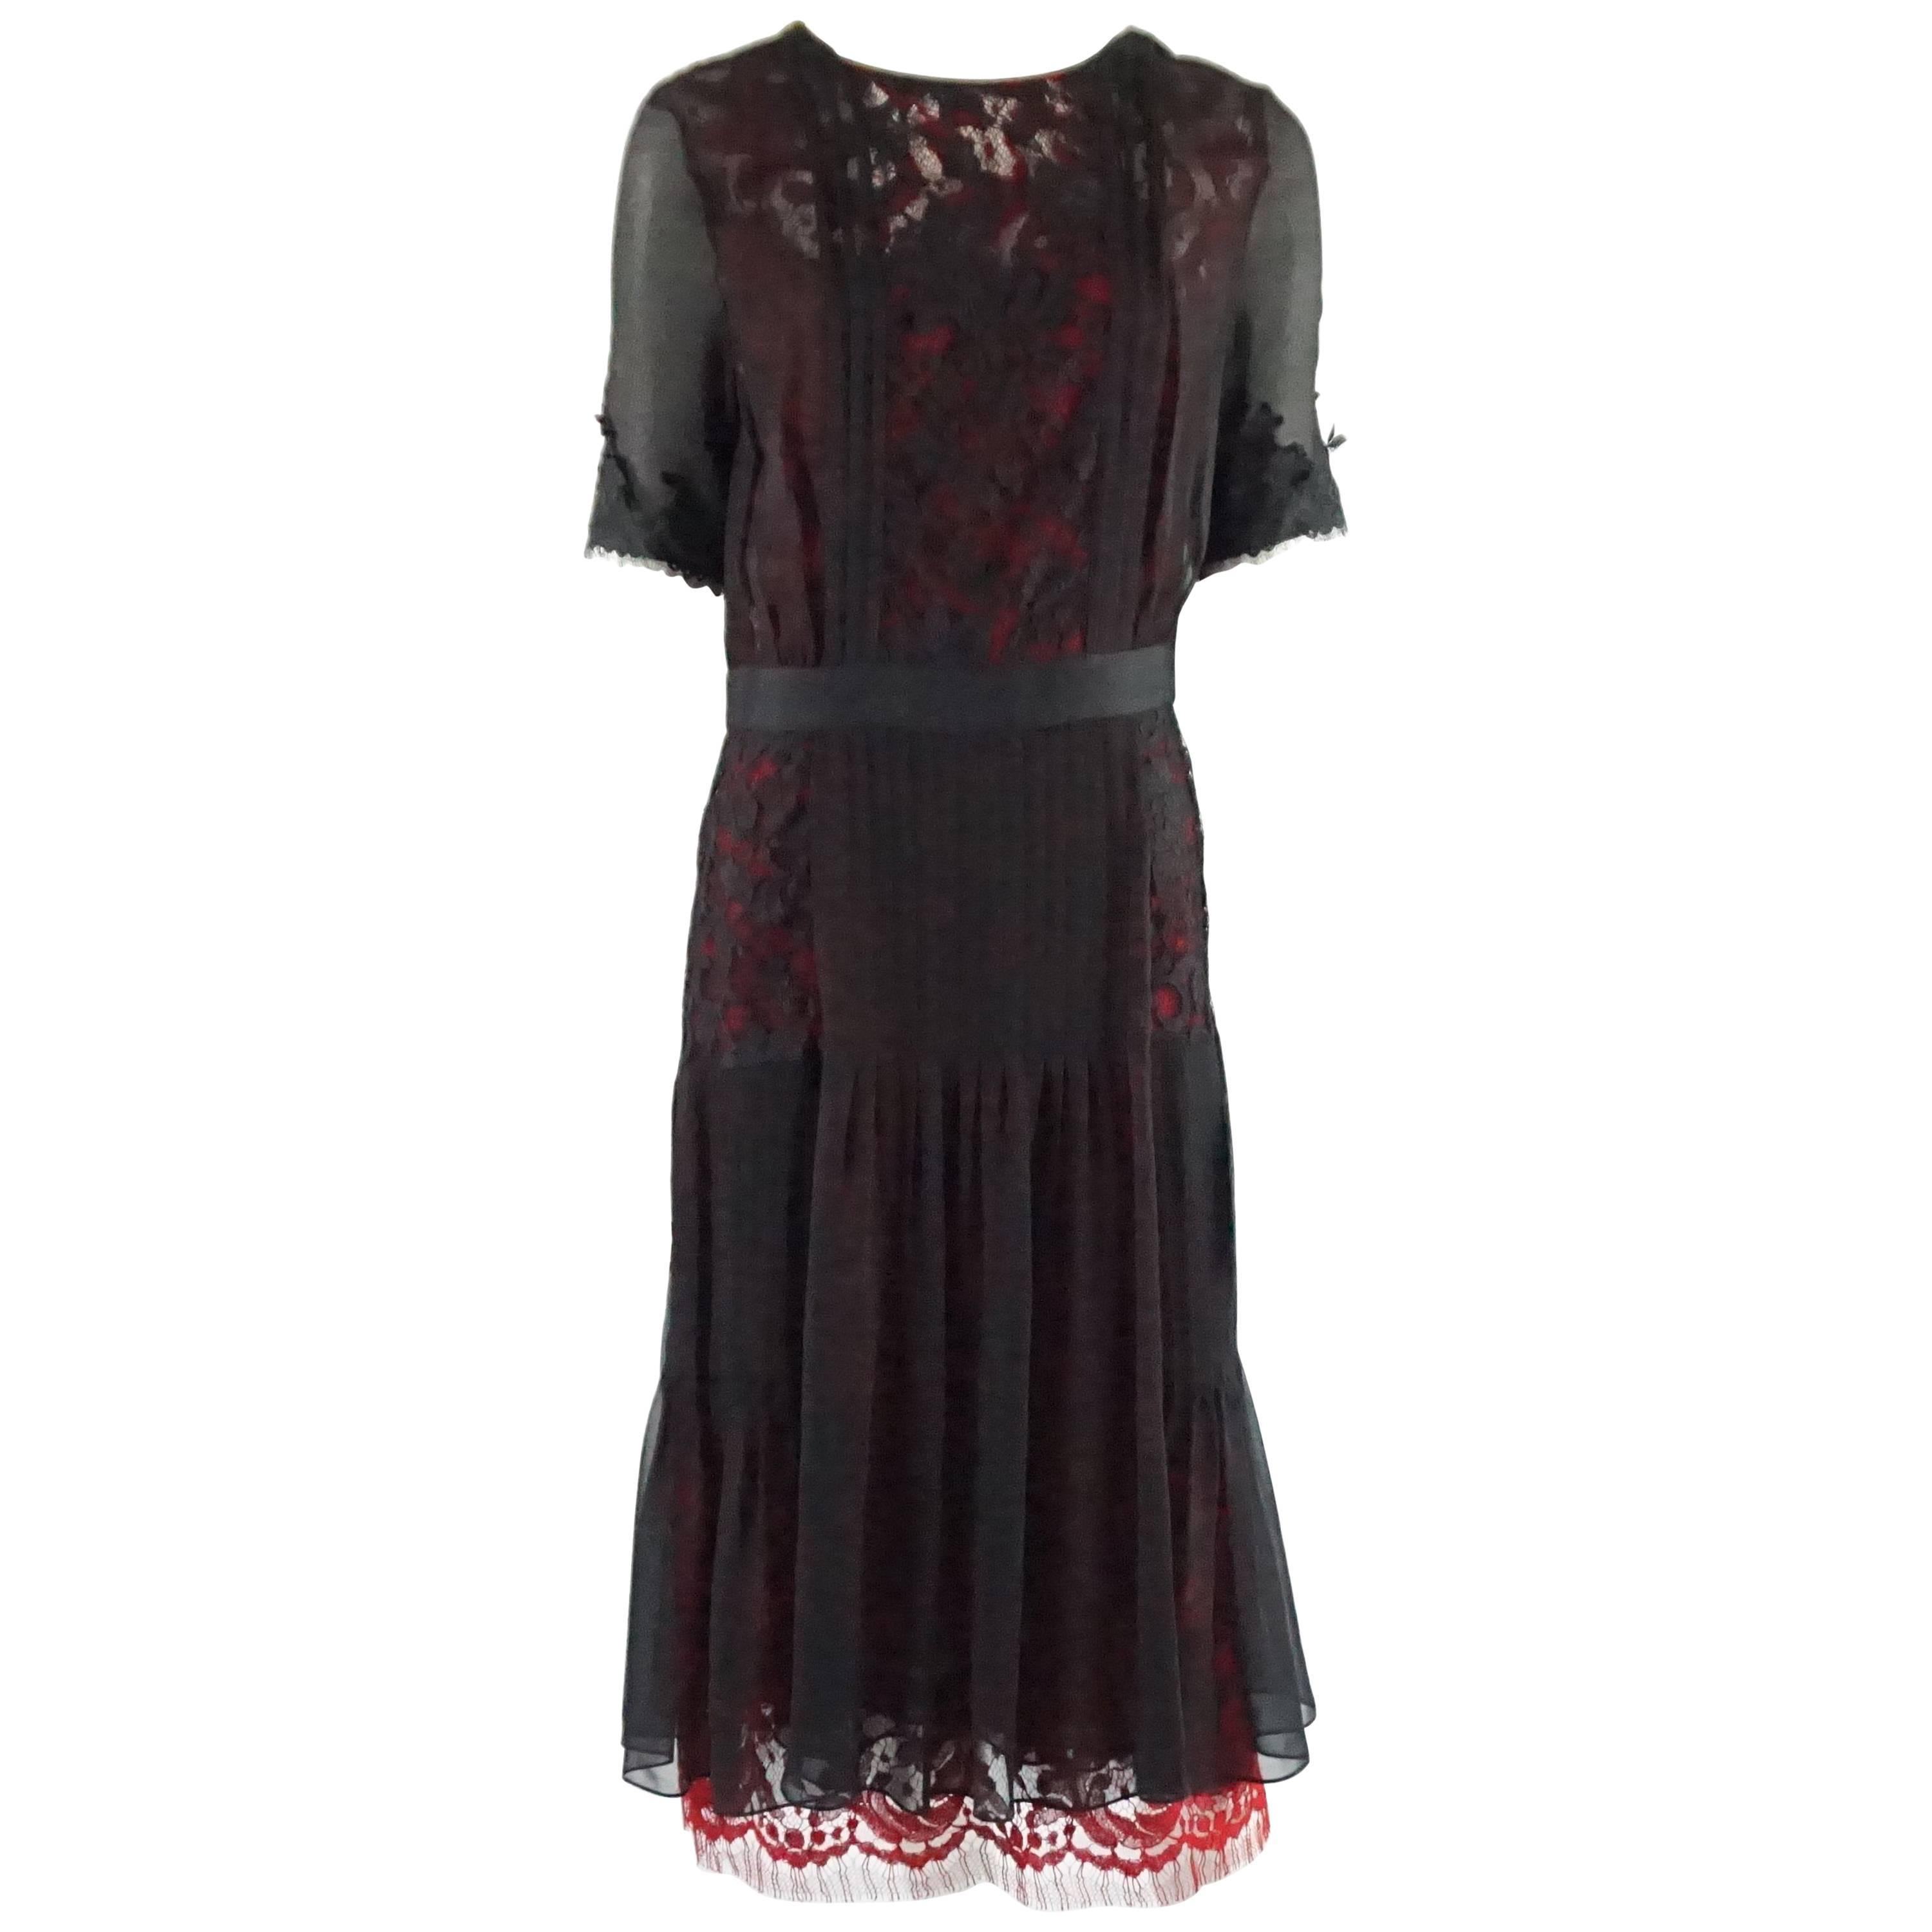 Oscar de la Renta Black and Red Silk Chiffon Dress with Lace - 10 - NWT For Sale